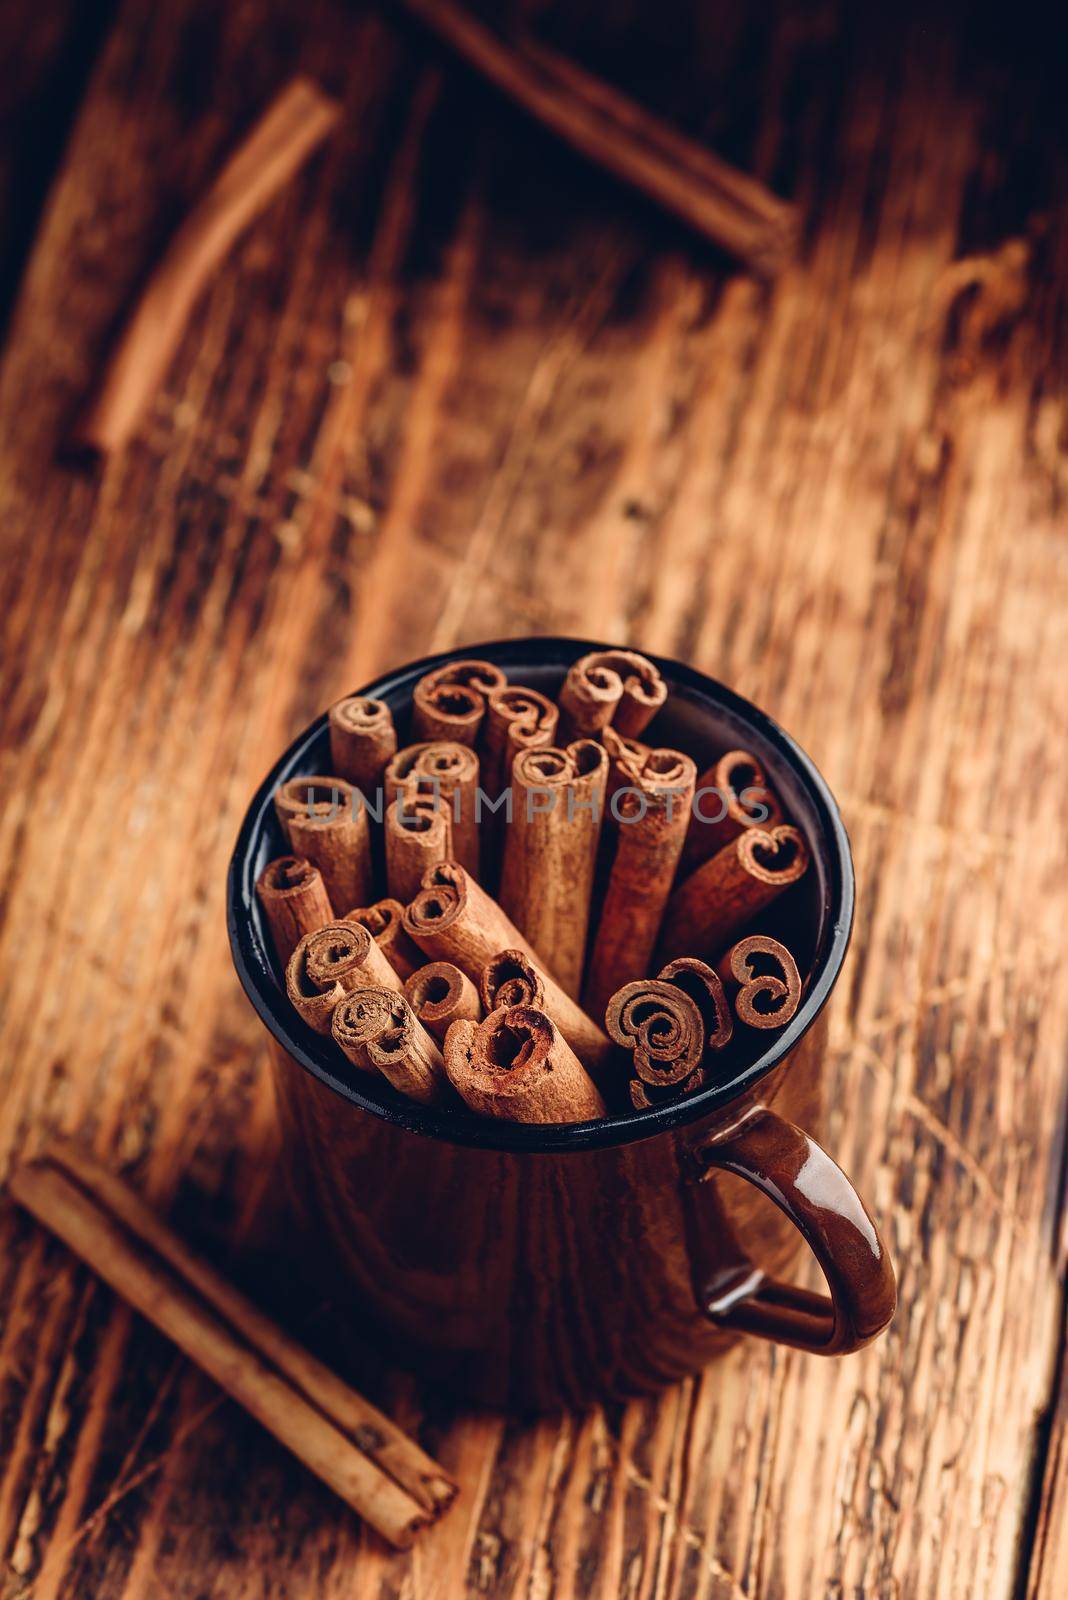 Cinnamon sticks in a metal mugr by Seva_blsv